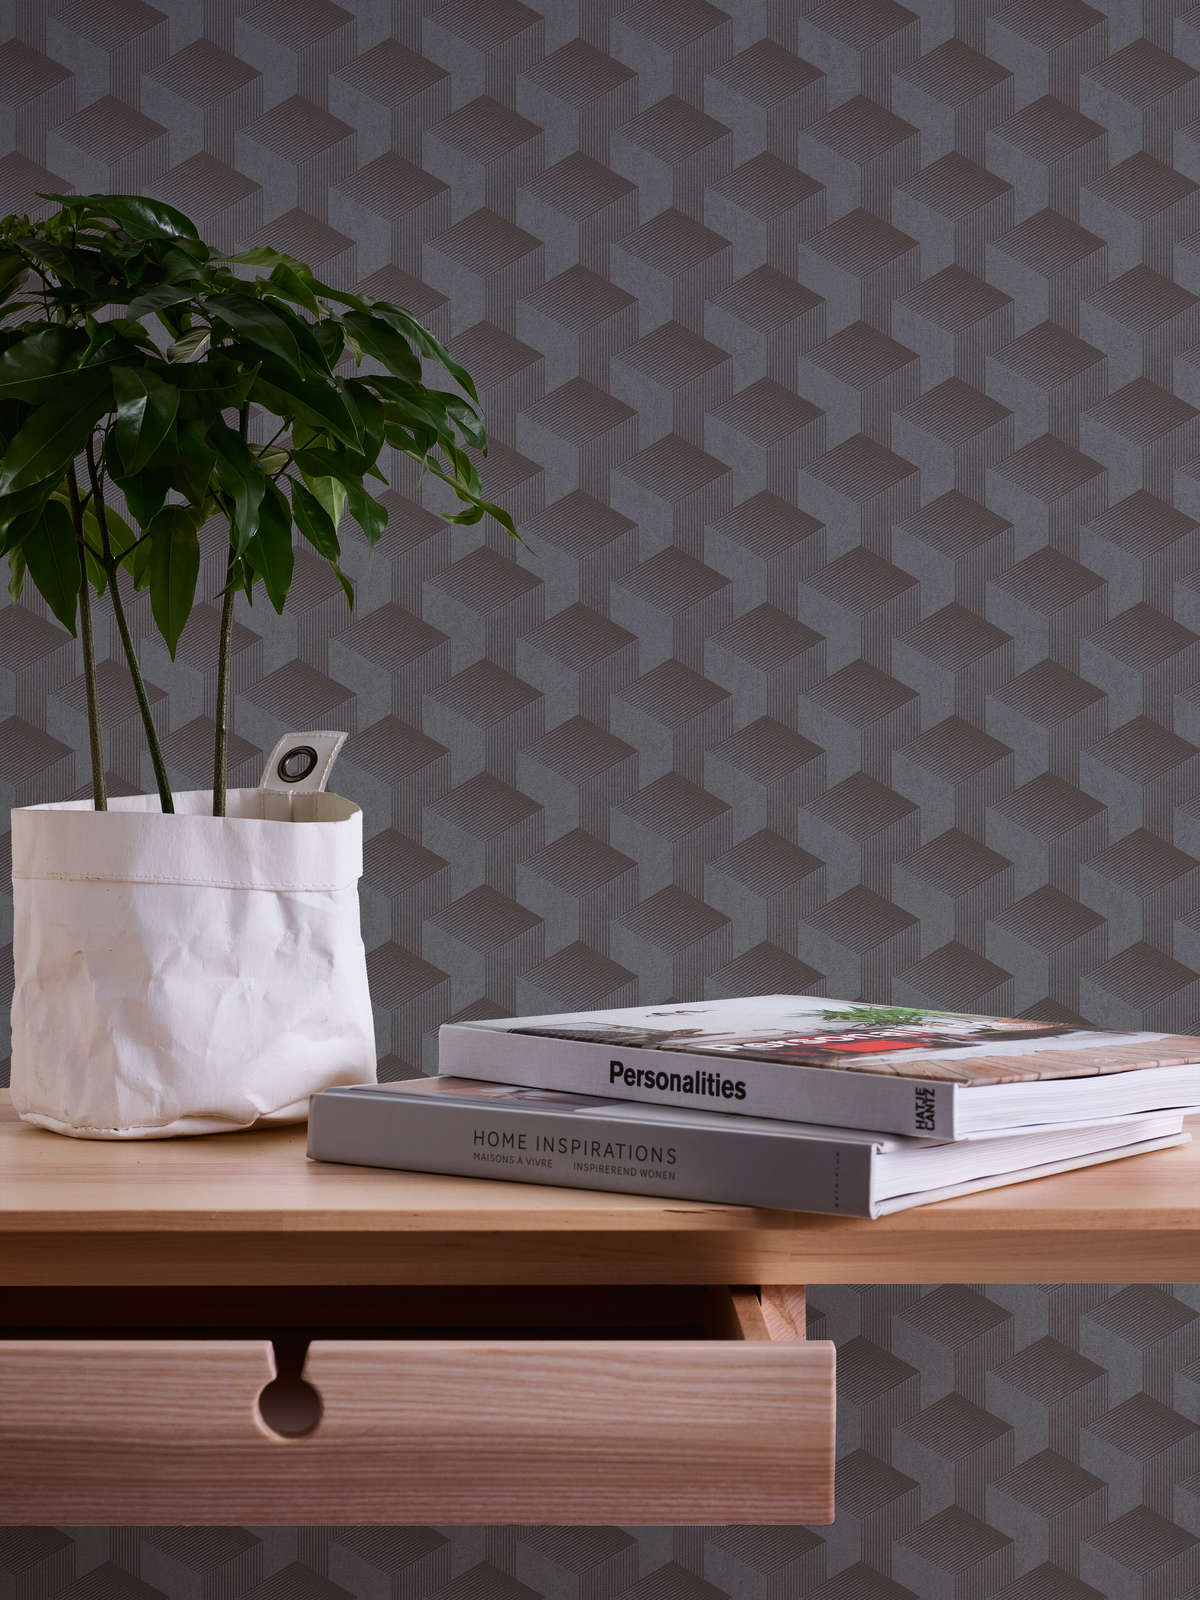             Graphic wallpaper with 3D pattern matt - dark grey
        